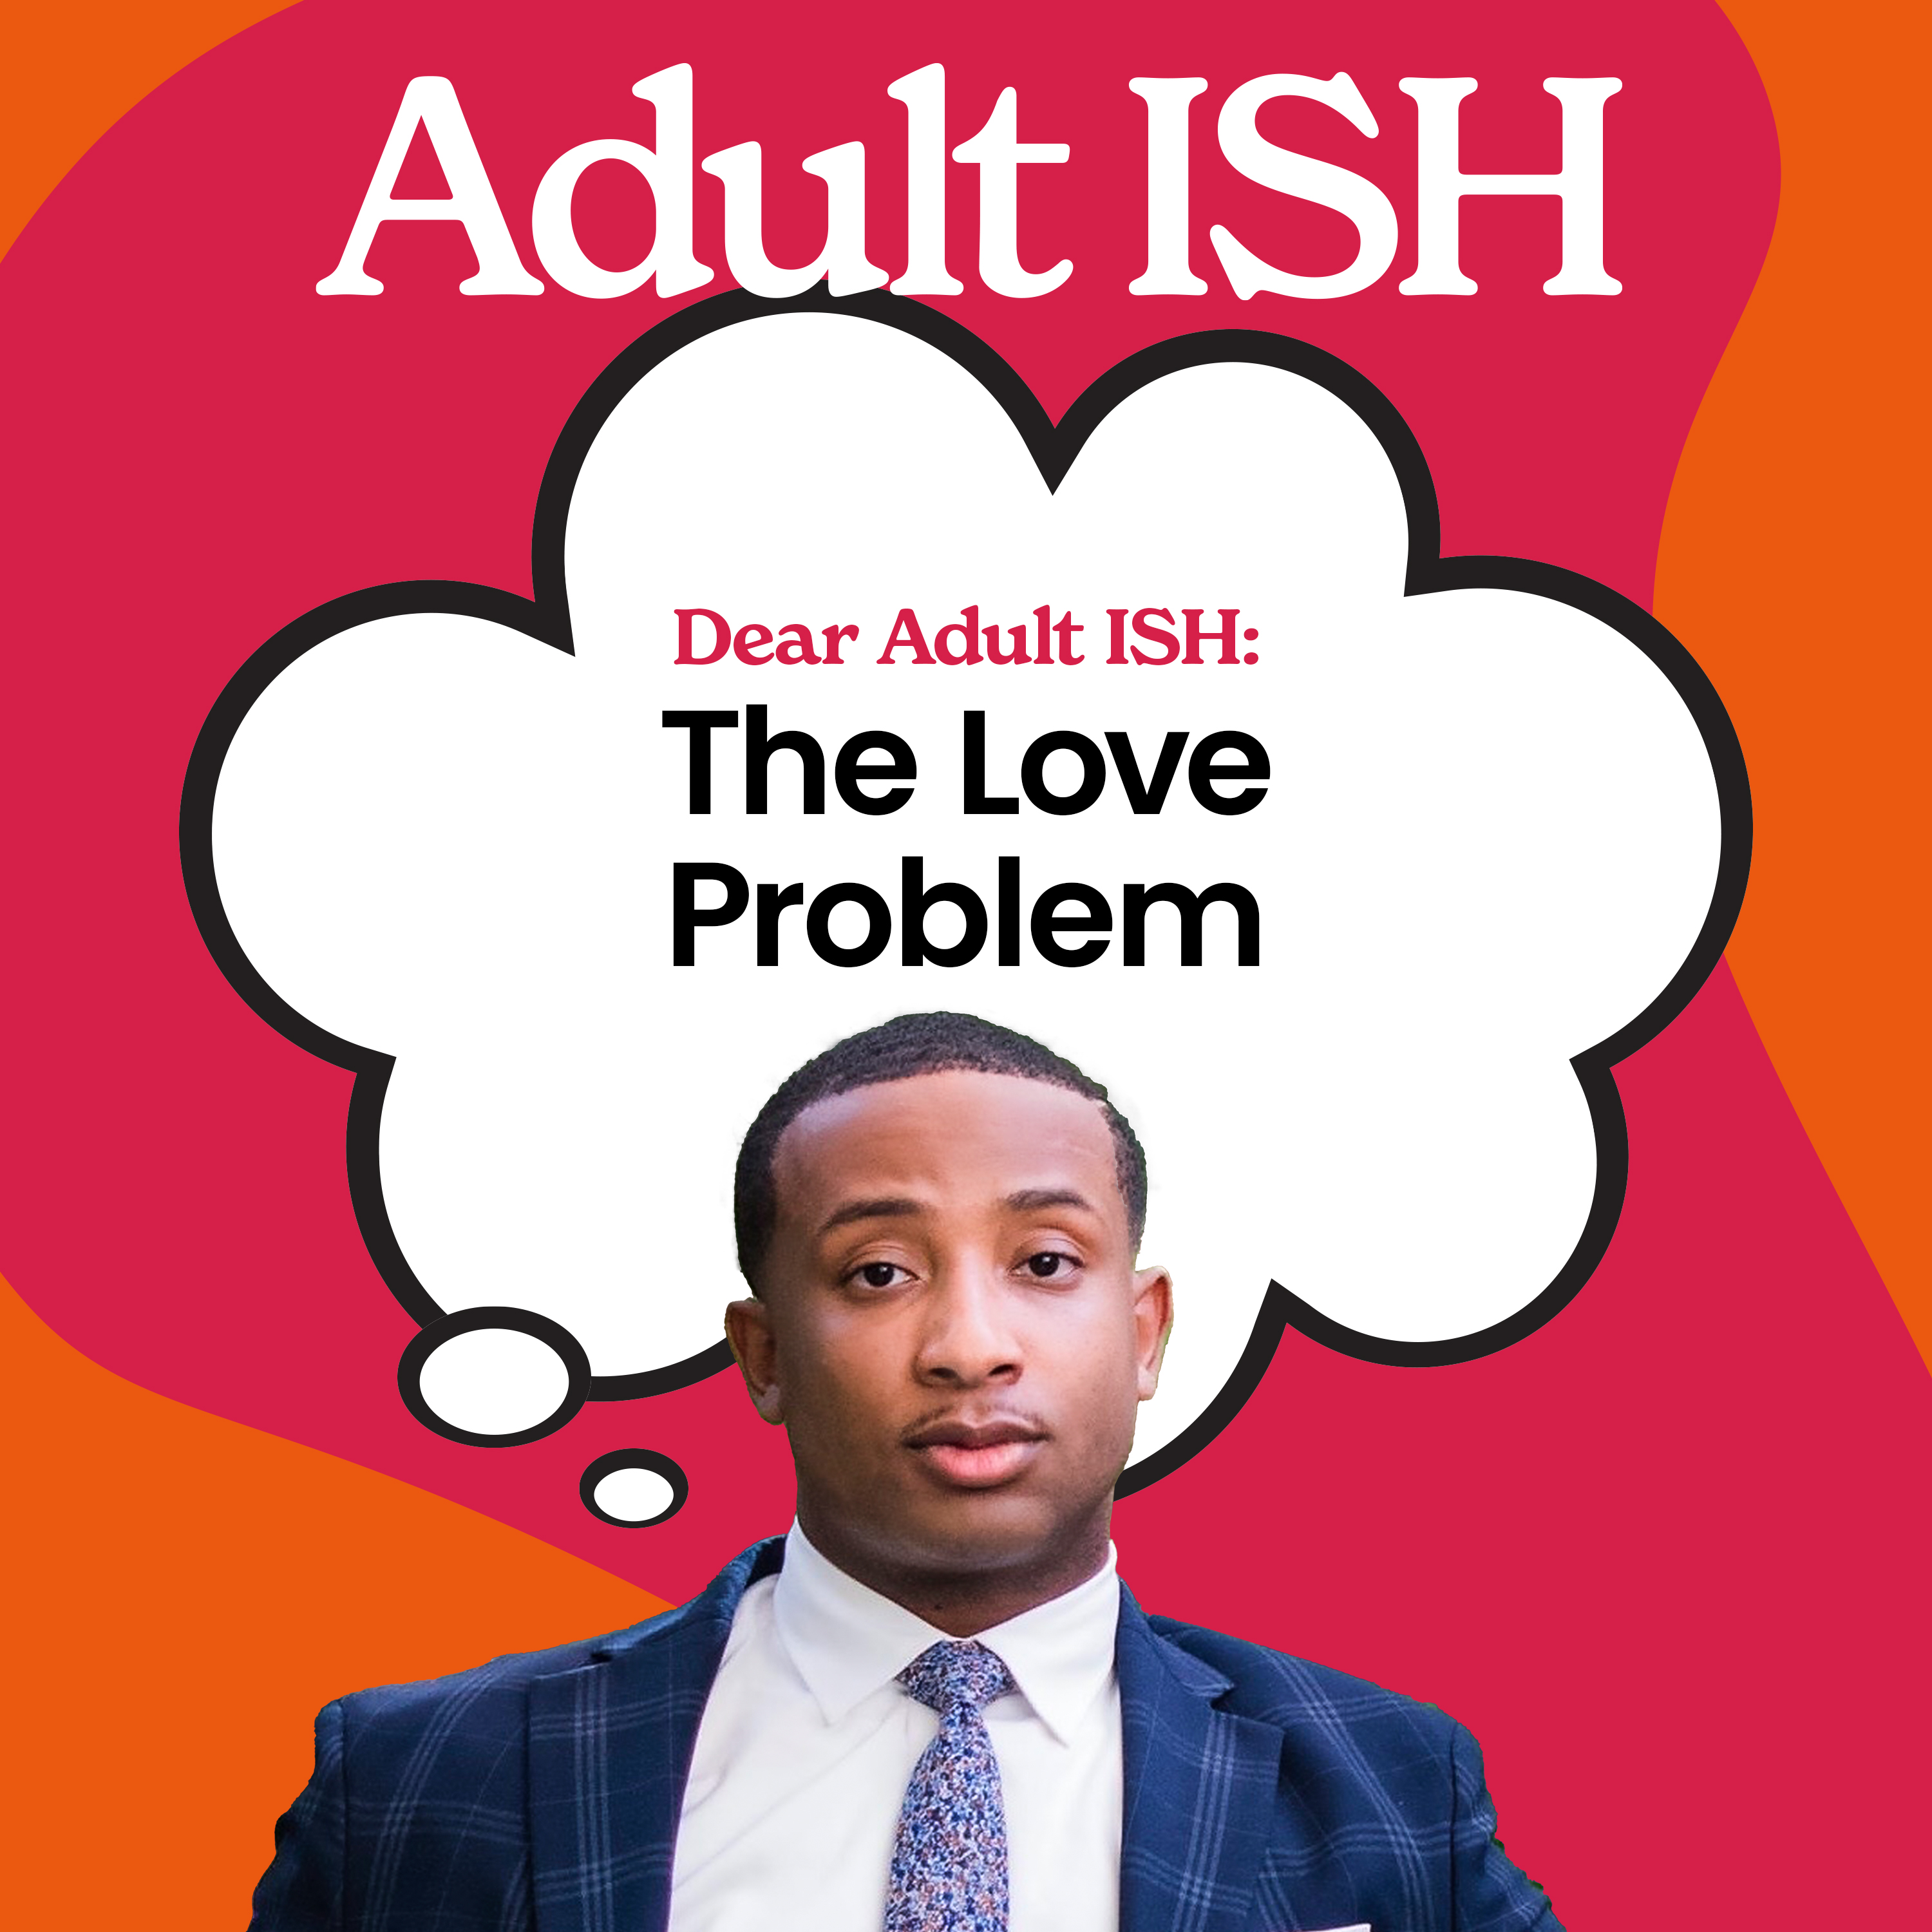 Dear Adult ISH: The Love Problem